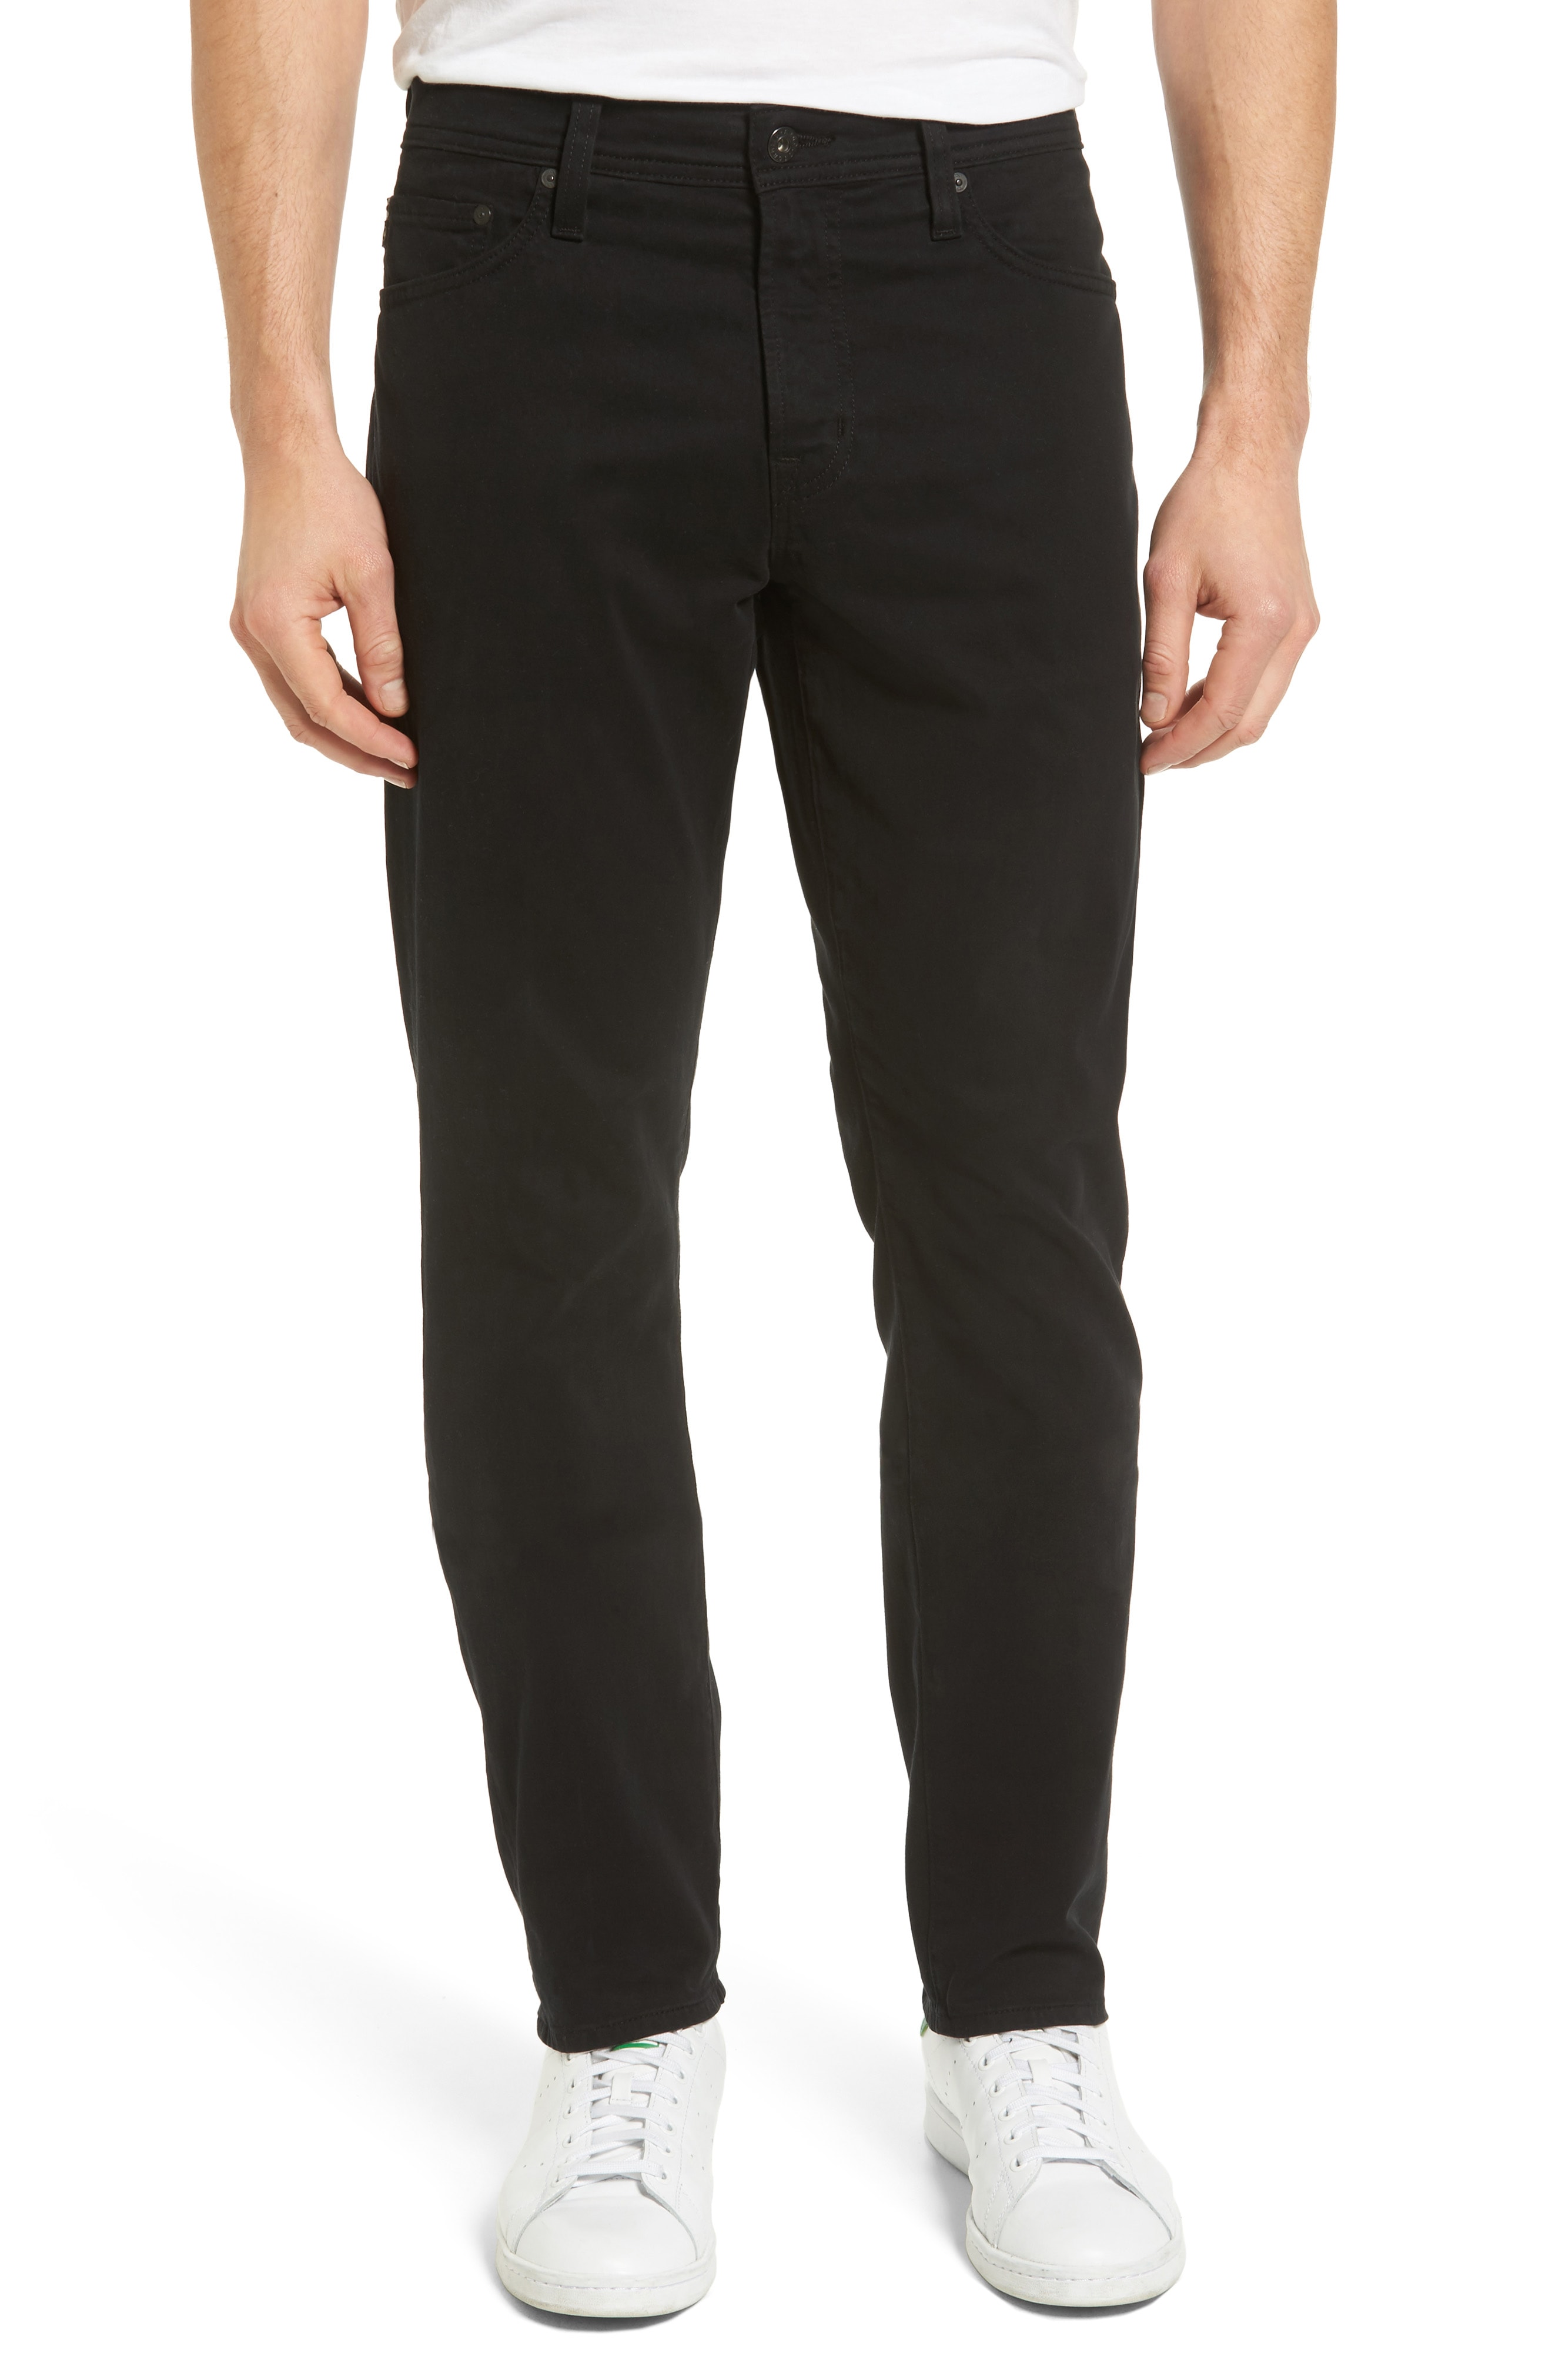 Men's Black Pants & Trousers | Nordstrom